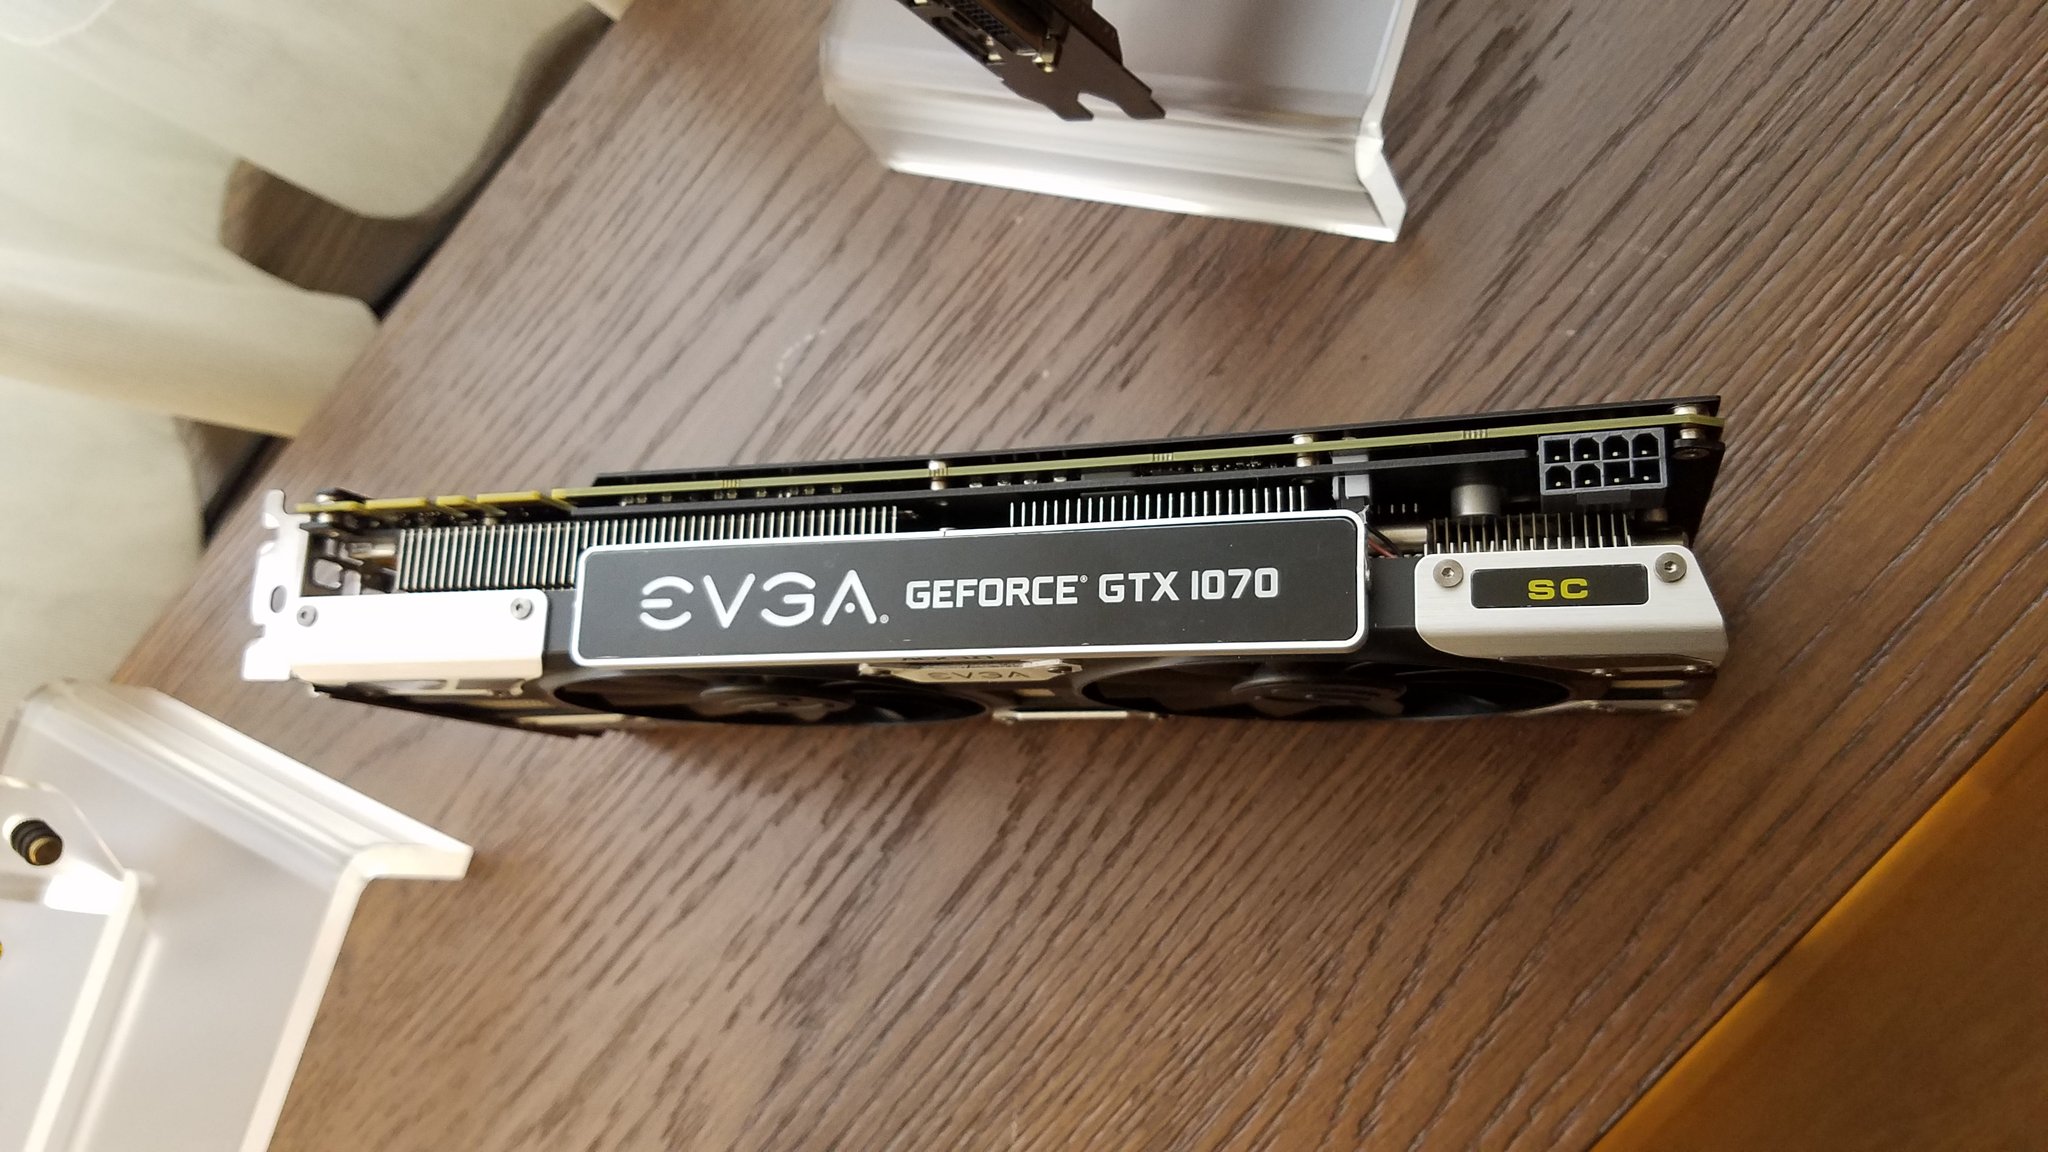 EVGA GeForce GTX 1070 SuperClocked spotted | VideoCardz.com